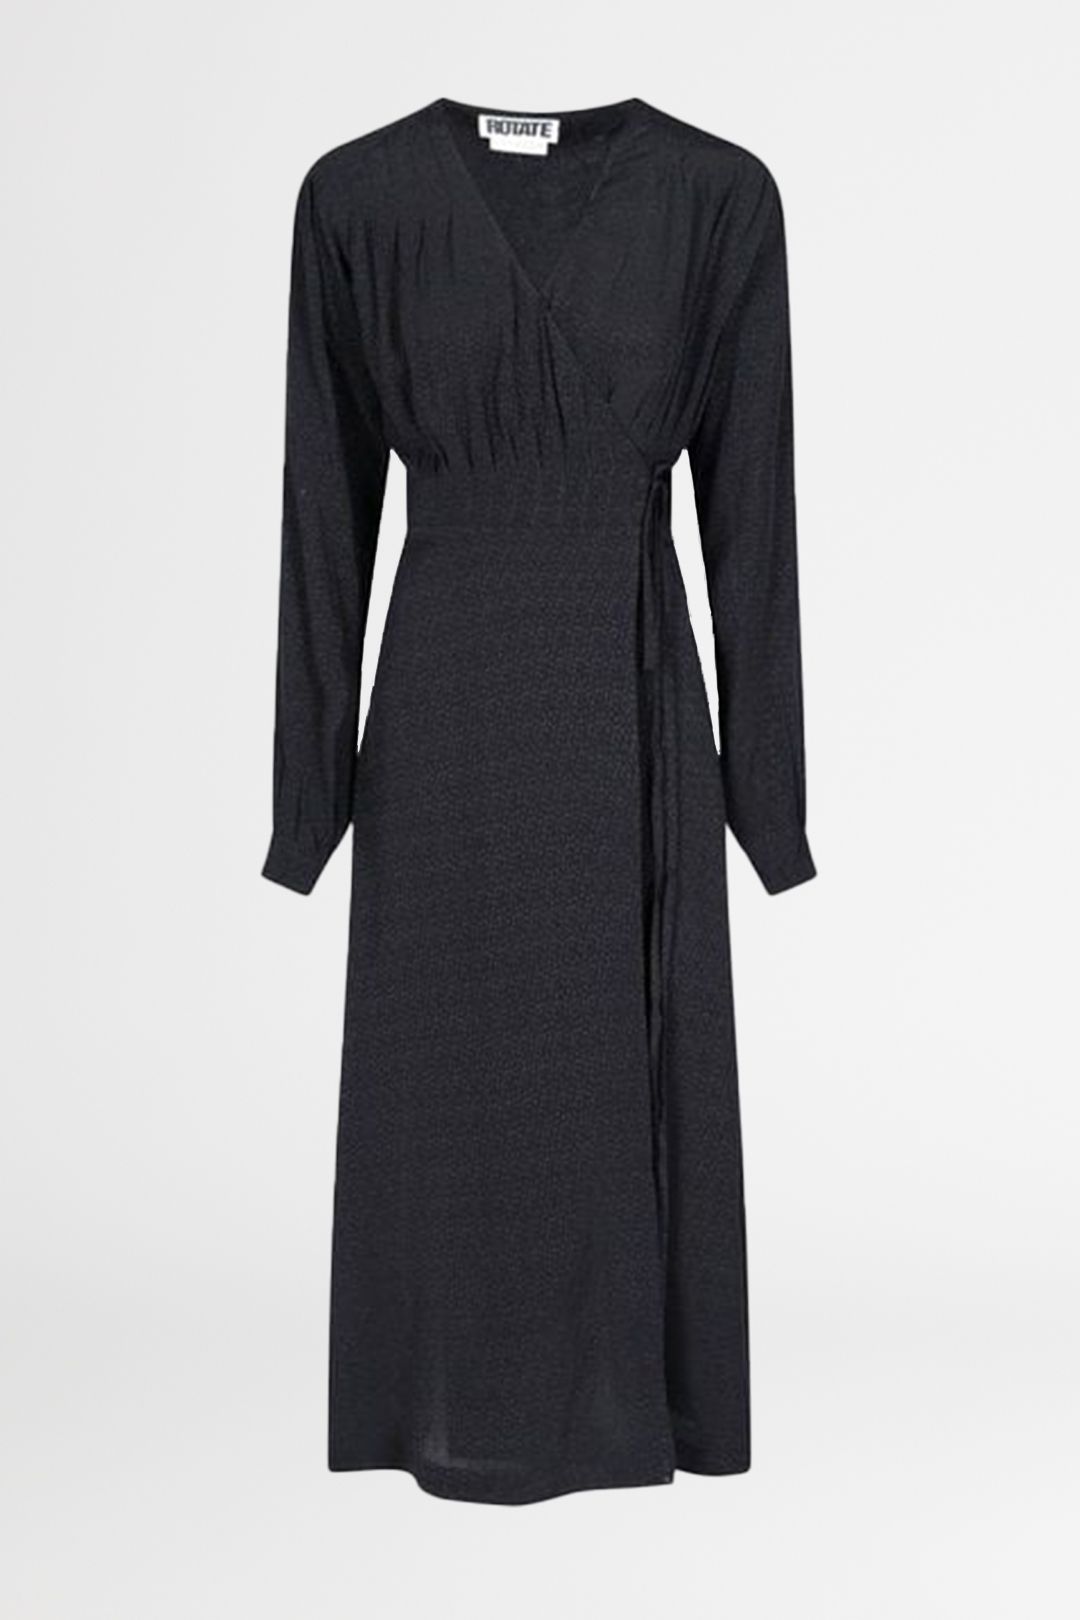 Hire Marisol Black Dress in Black | Rotate By Birger Christensen ...